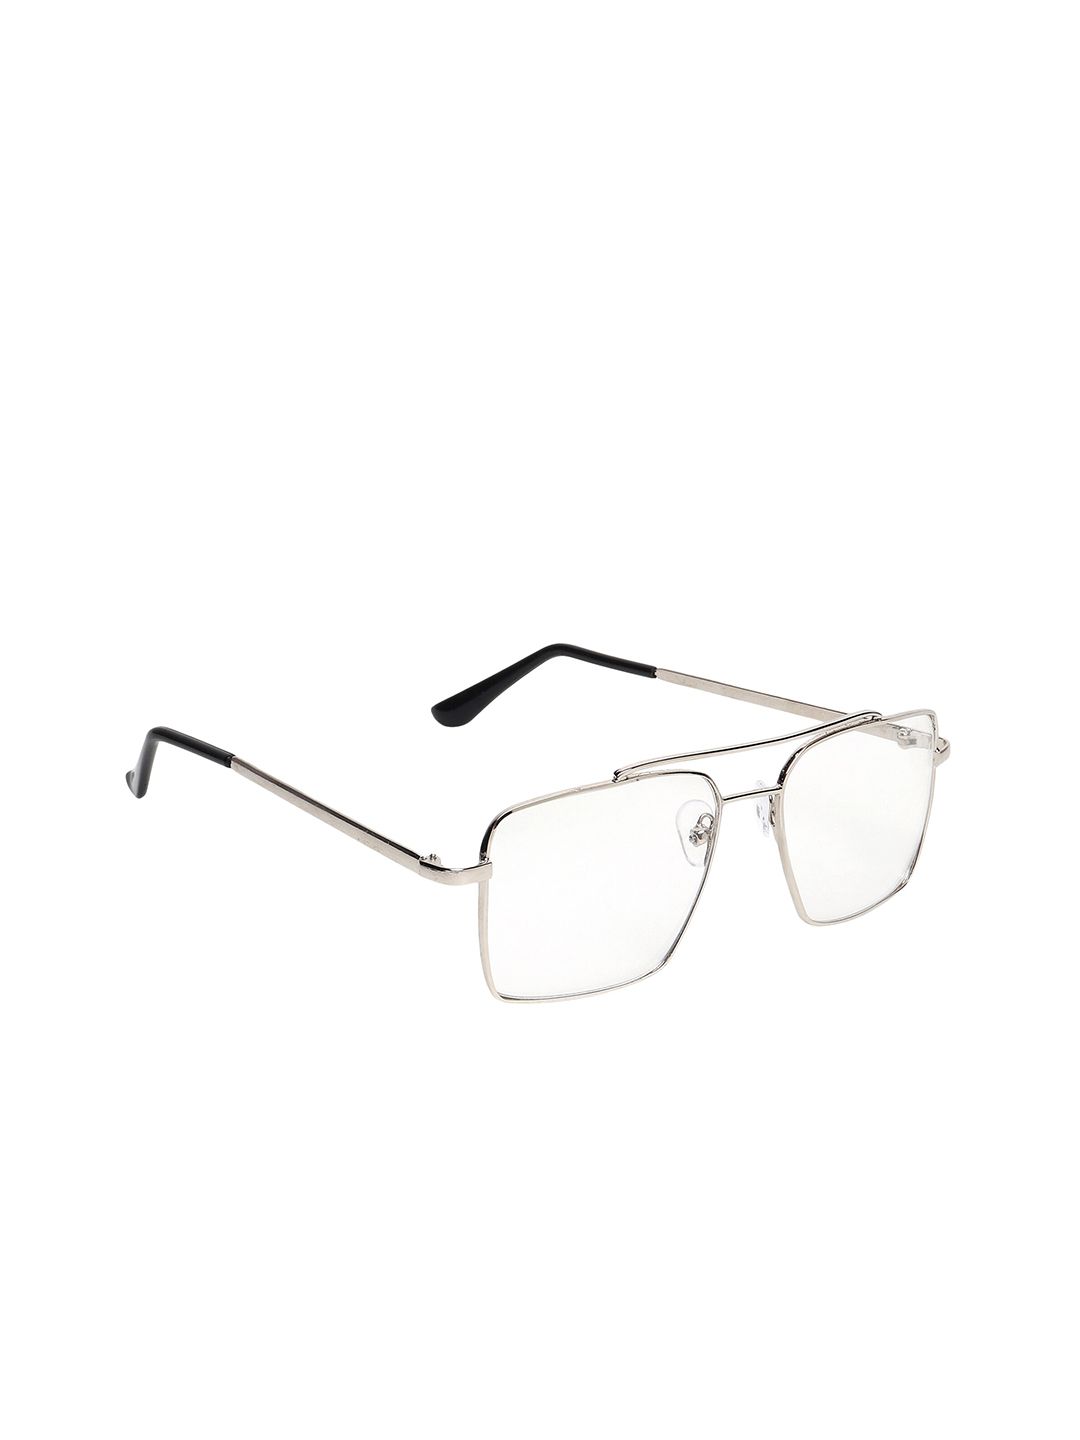 ALIGATORR Unisex Clear Lens & Silver-Toned UV Protected Square Sunglasses AGR_QUATRA_N-WHT Price in India